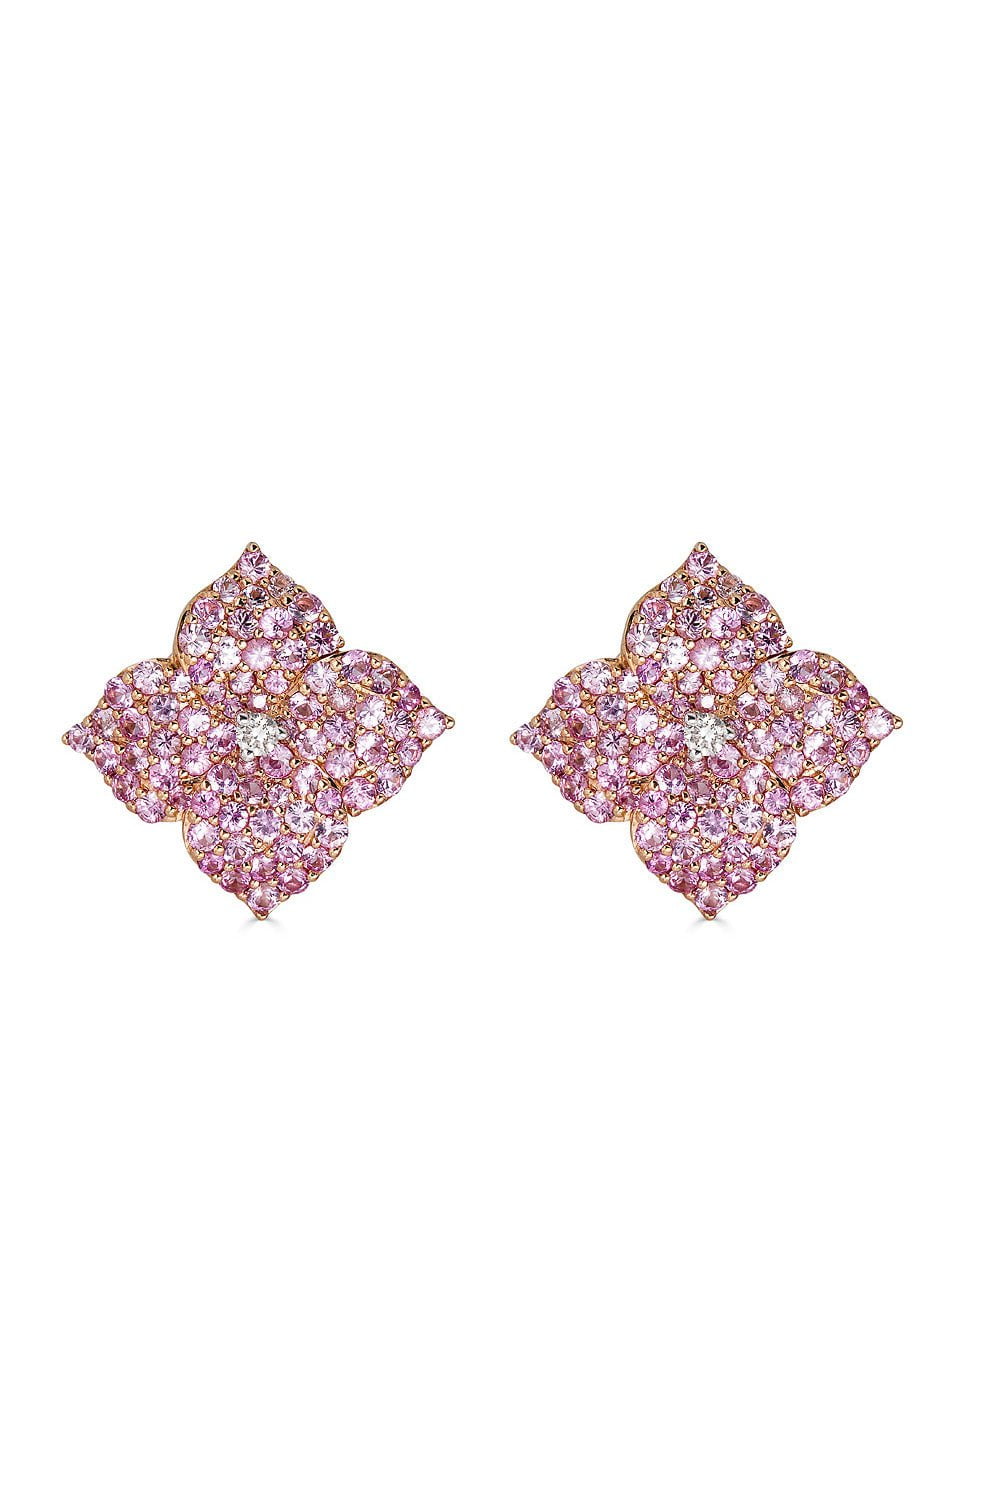 PIRANESI-Pink Sapphire Large Flower Stud Earrings-ROSE GOLD